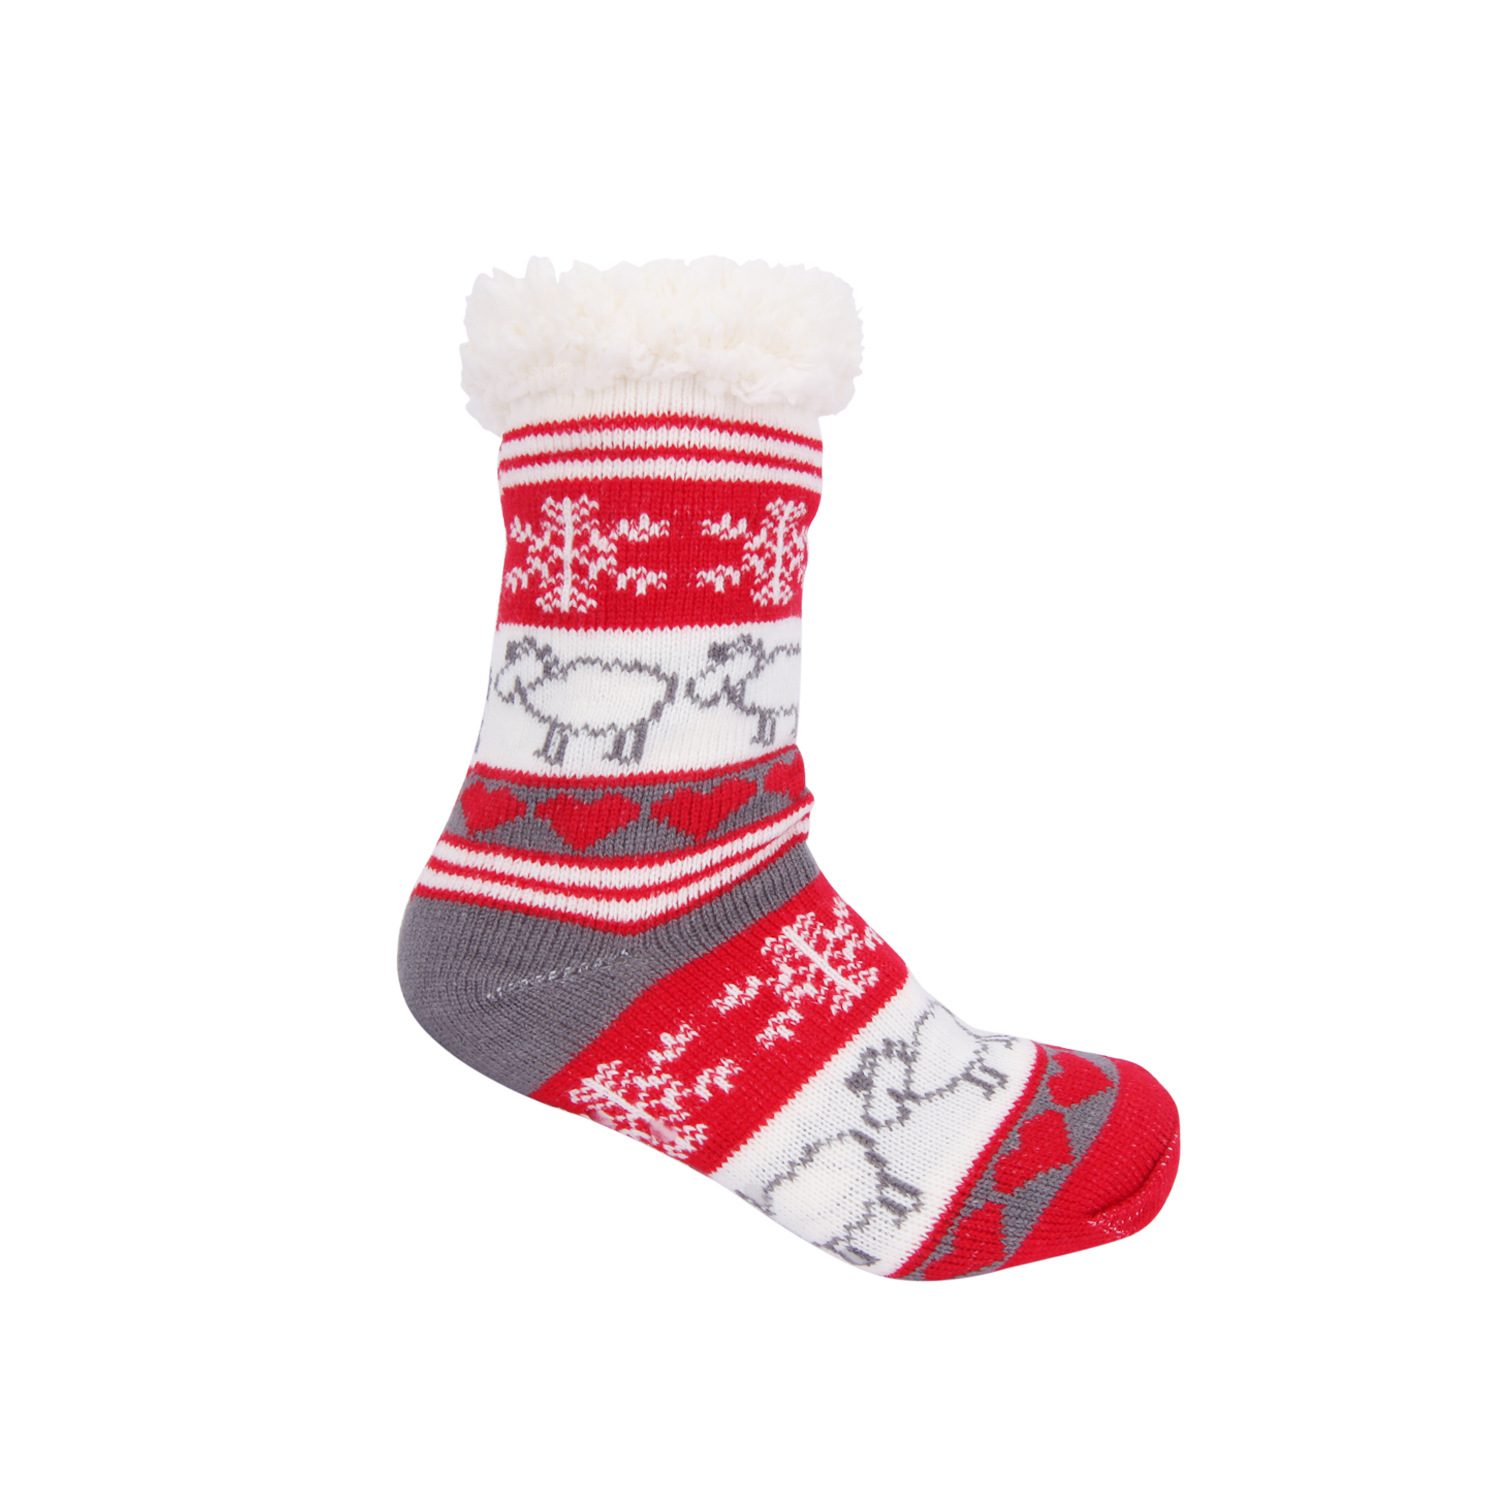 Factory source Plantar Fasciitis Socks - Fancy Christmas Socks Printed Fun Colorful Festive, Crew Knee Cozy Socks Holiday Design Soft Slipper Socks Reindeer Home floor Socks Winter Warm Cozy Fuzzy...